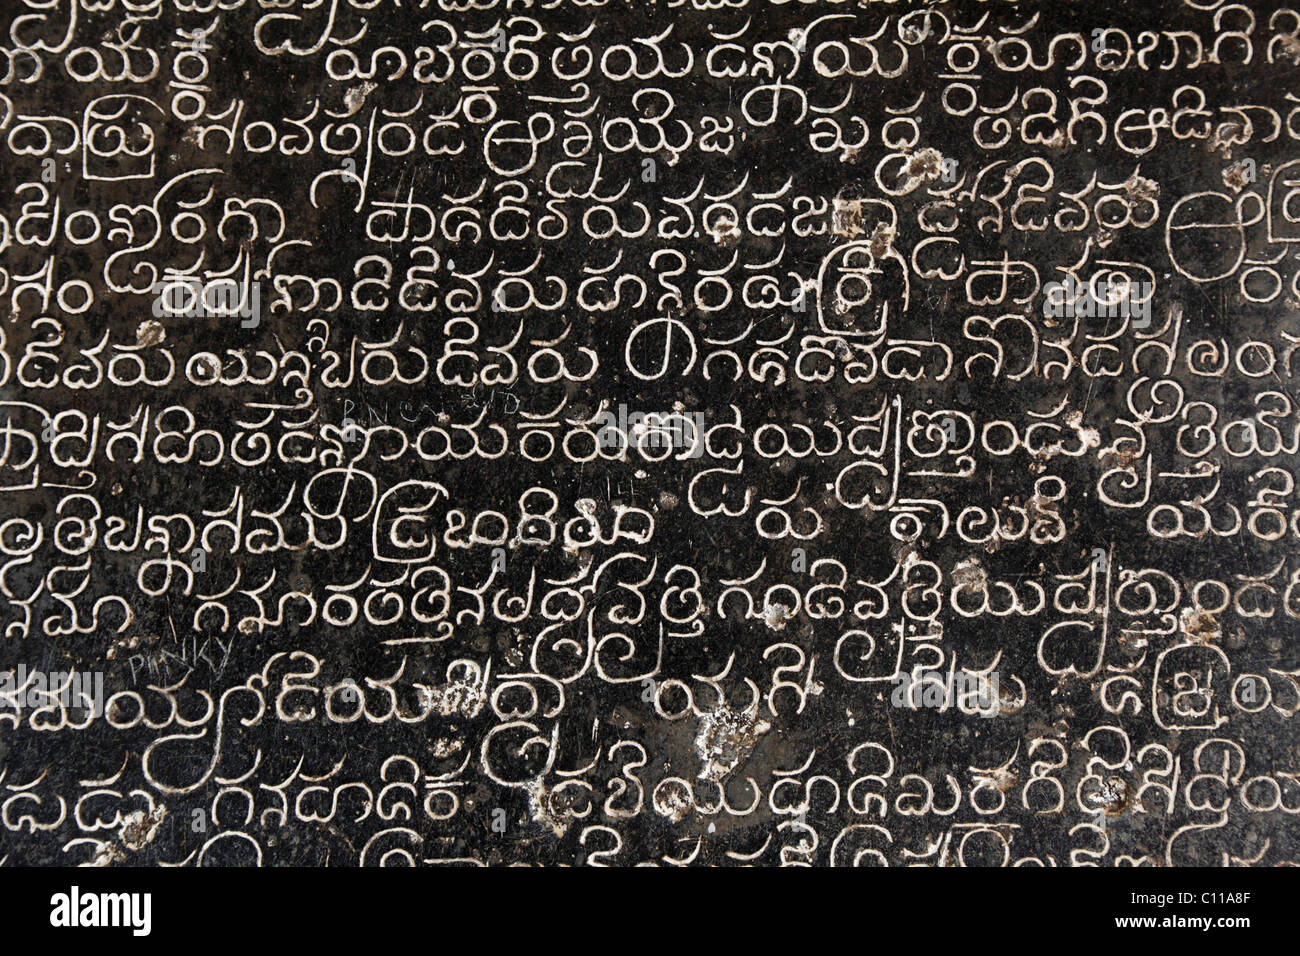 Stone inscription tablet, Kesava Temple, Keshava temple, Somnathpur, Somanathapura, Karnataka, South India, India, South Asia Stock Photo